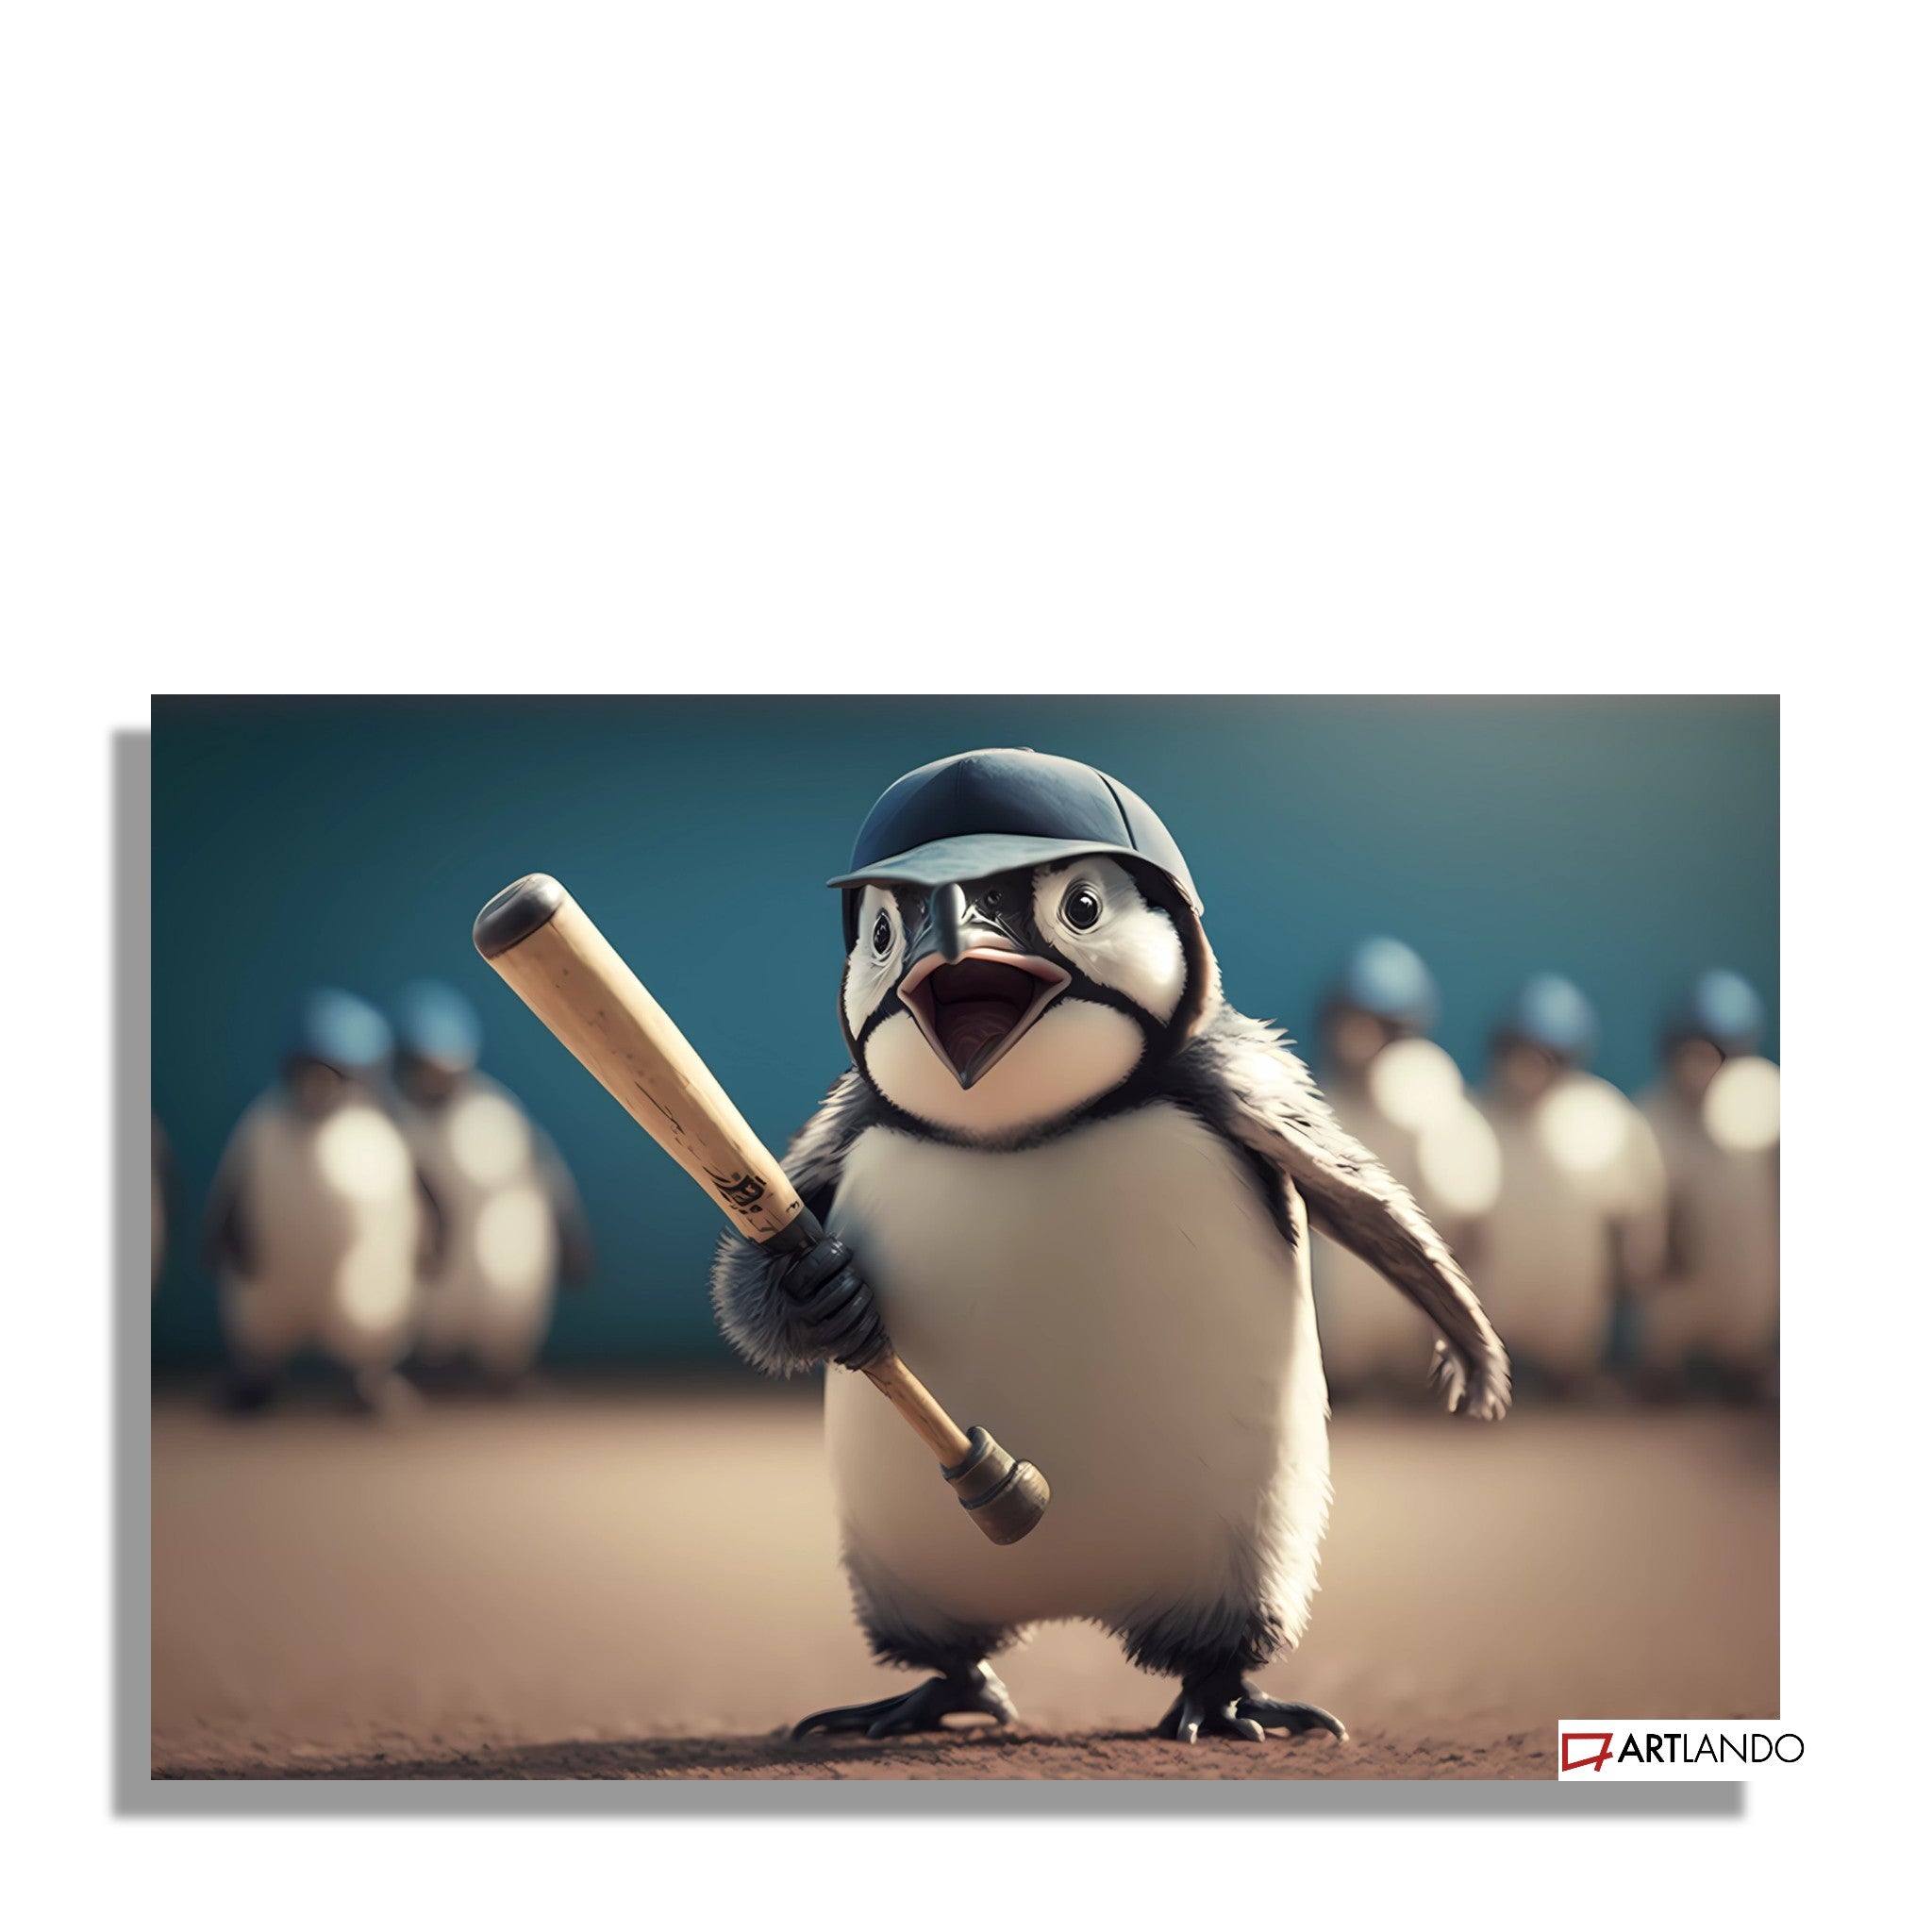 Pinguin im Baseballoutfit